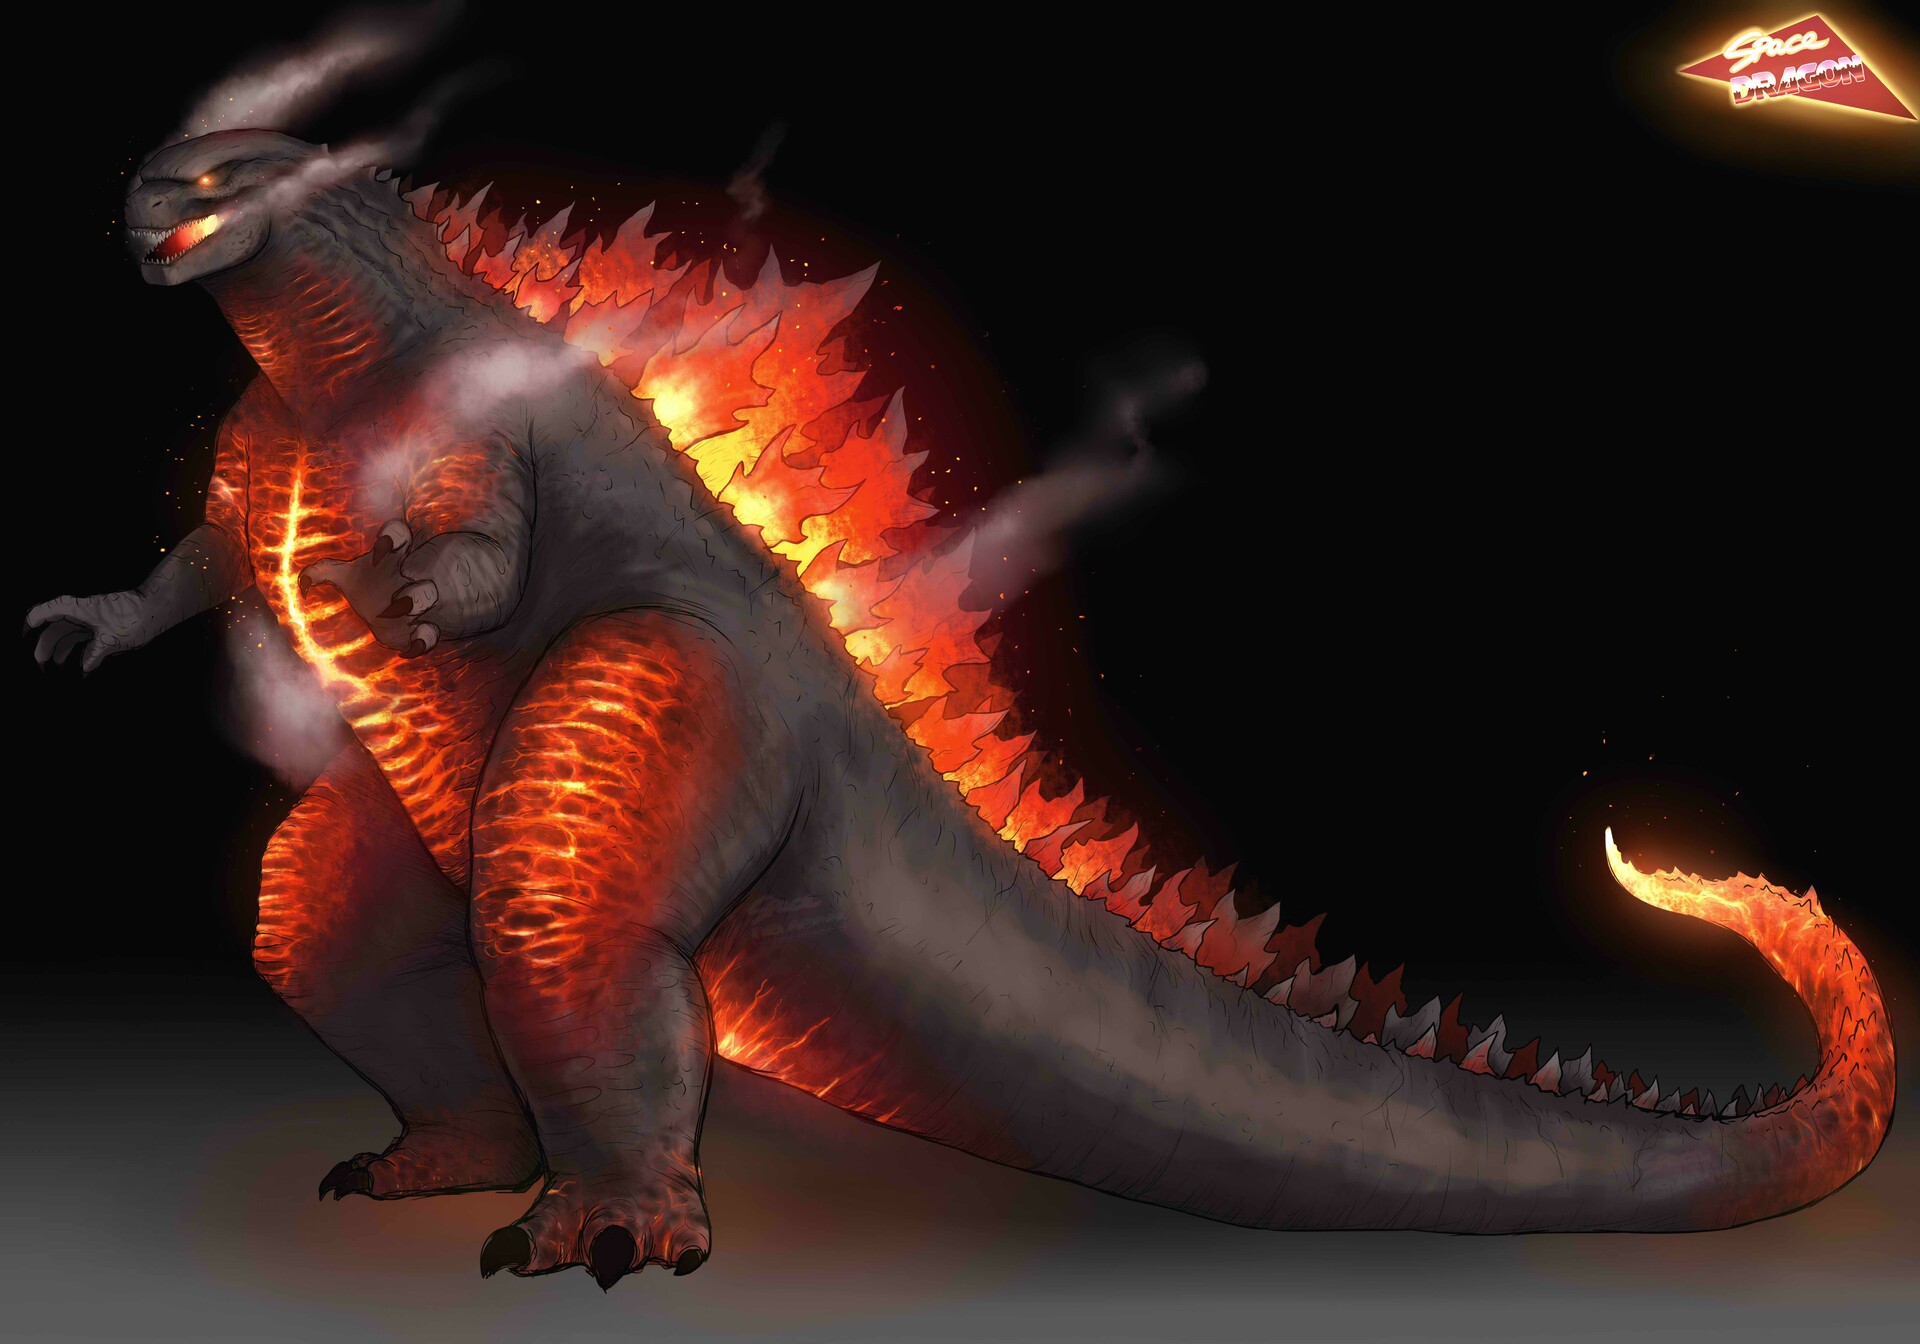 Legendary Burning Godzilla, Federico Villalba